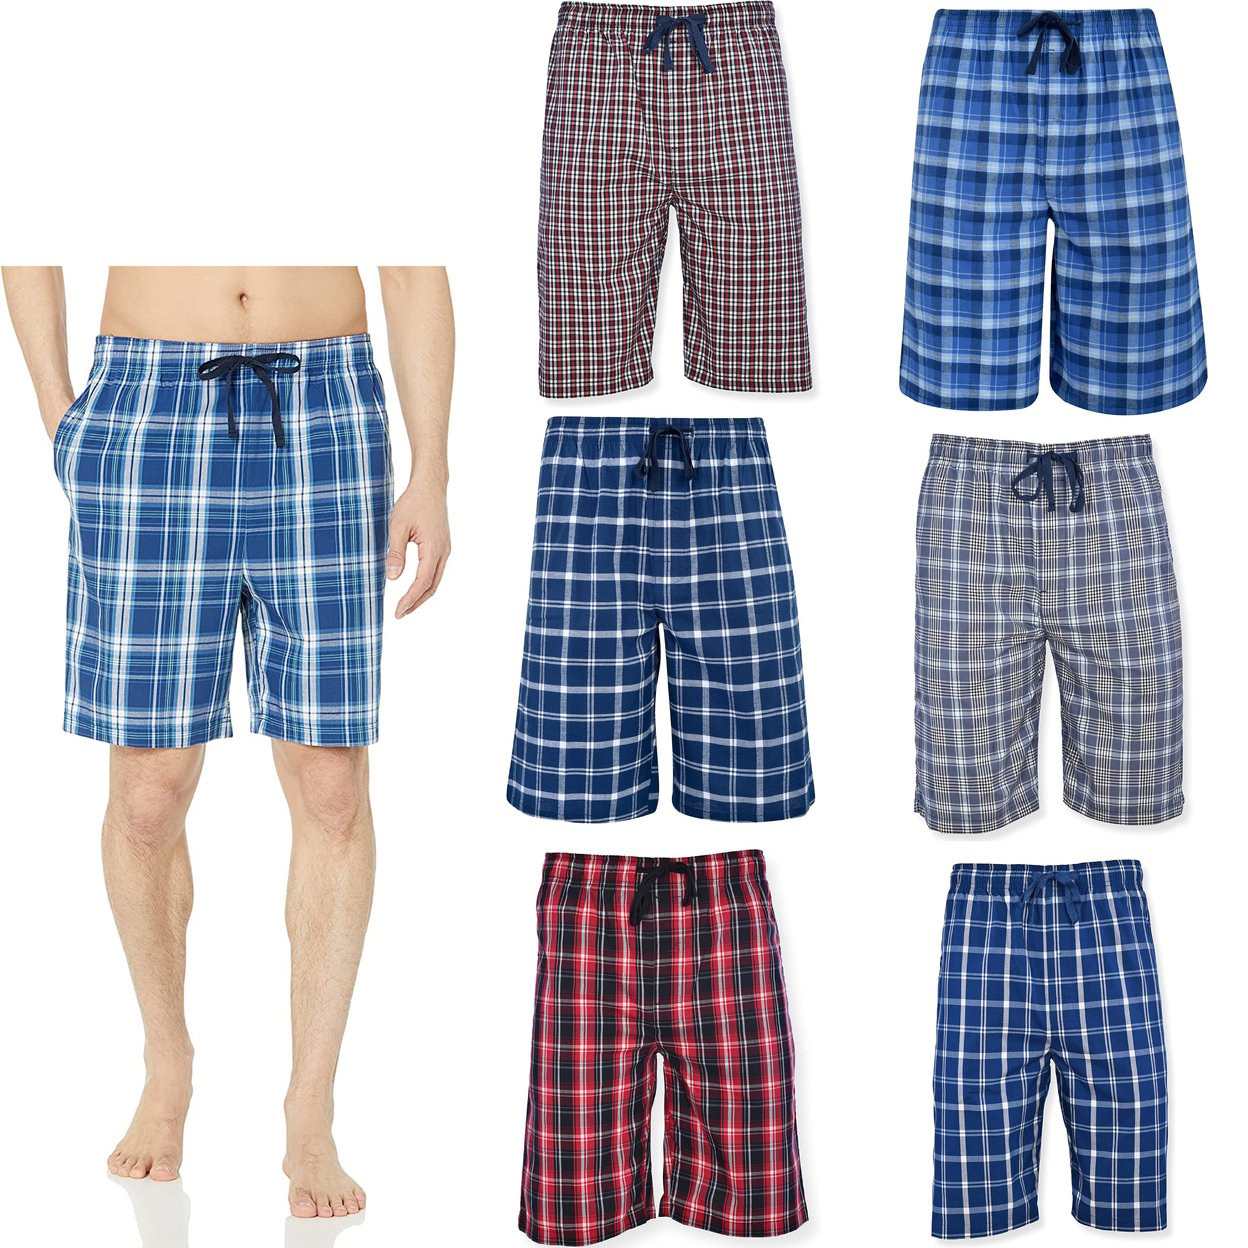 2-Pack: Men's Ultra Soft Plaid Lounge Pajama Sleep Wear Shorts - Blue & Blue, Large